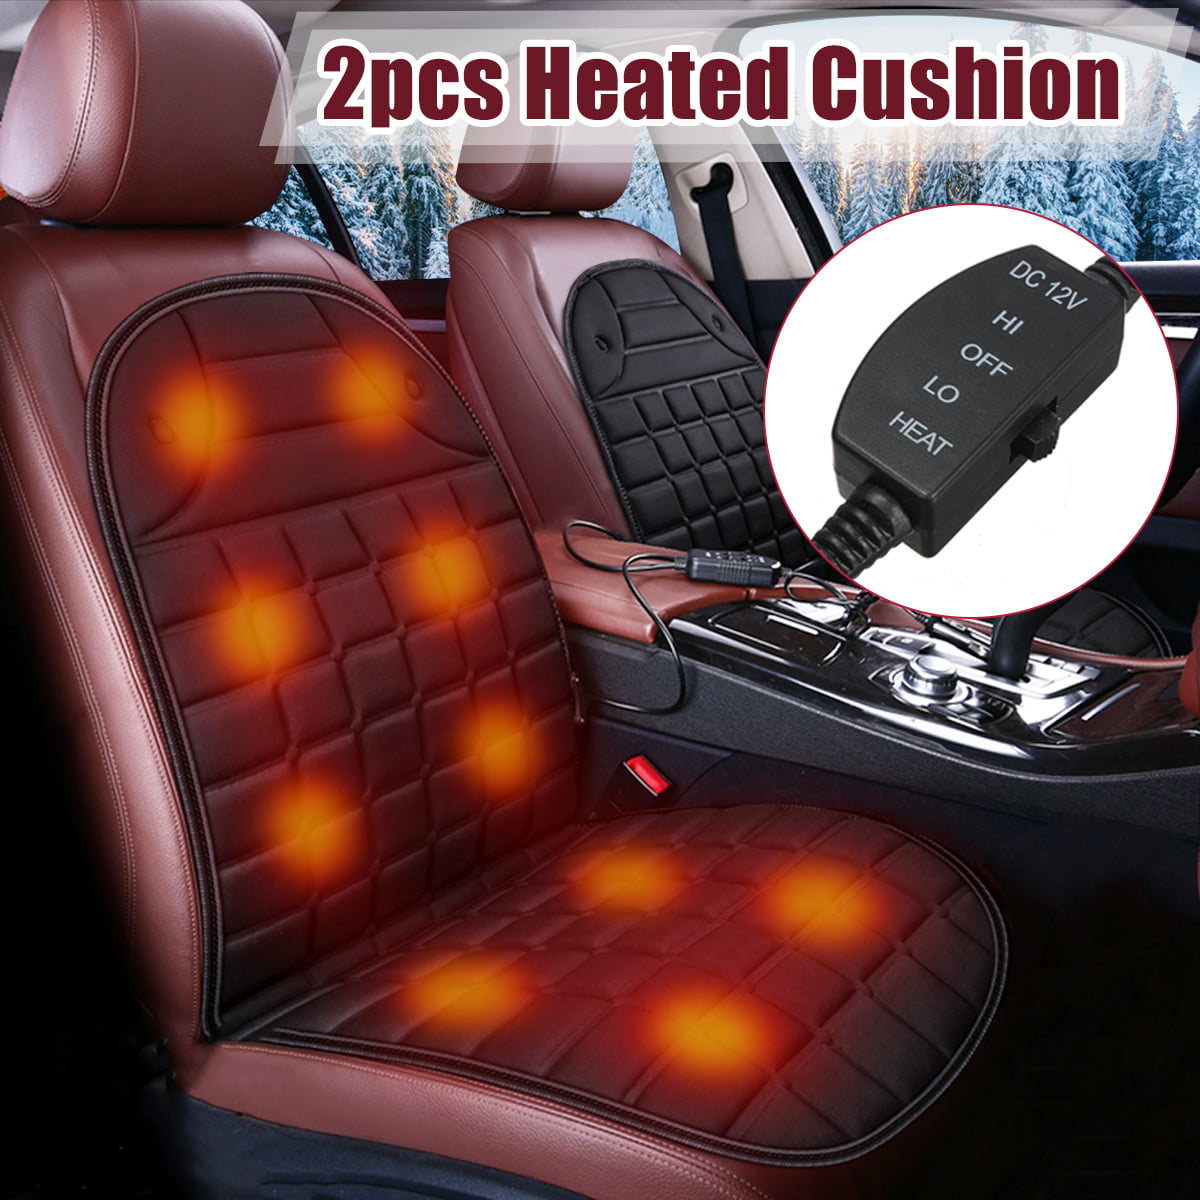 12V Car Heated Seat Cover Cushion Hot Warmer - Heating Warmer Pad Cover ...